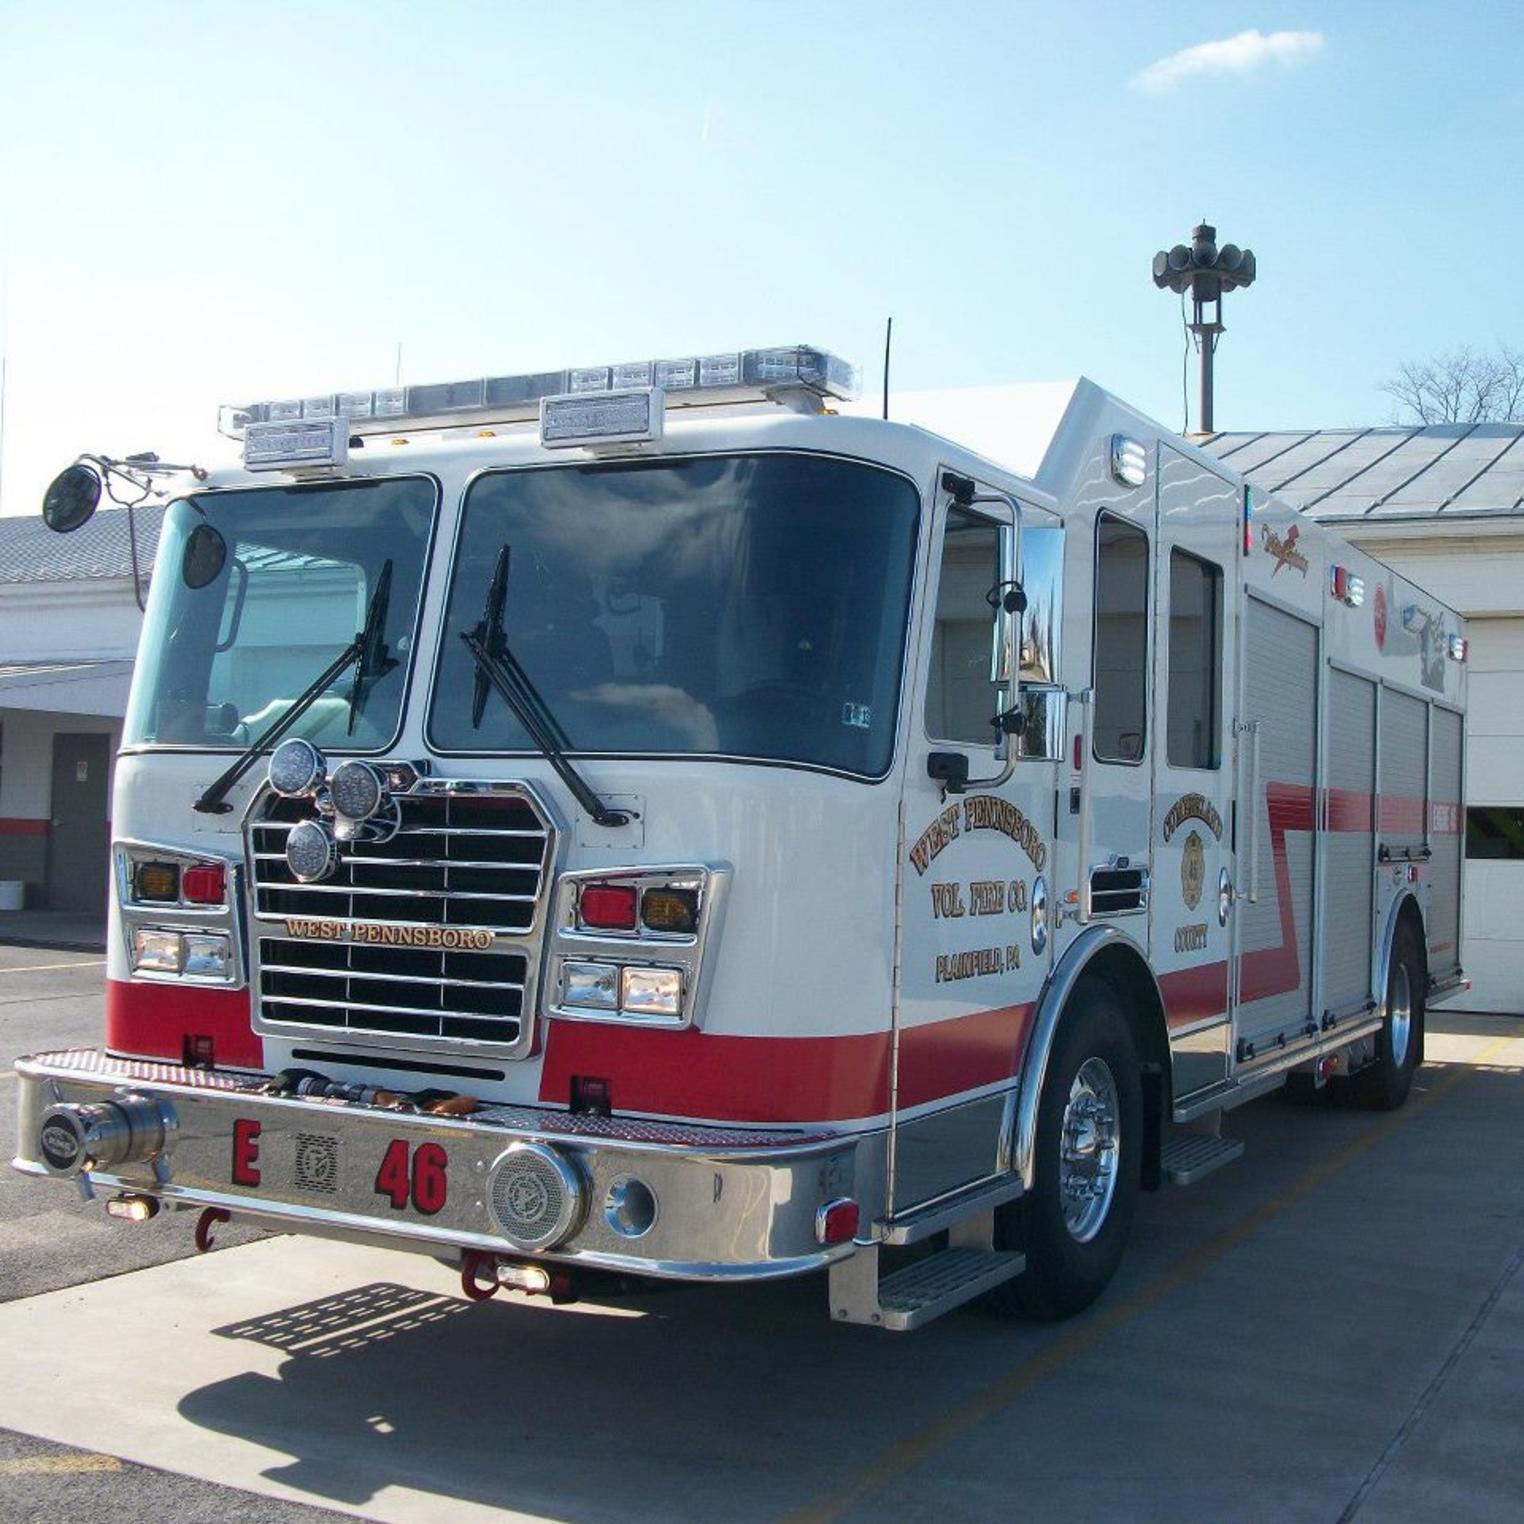 West Pennsboro Fire Department